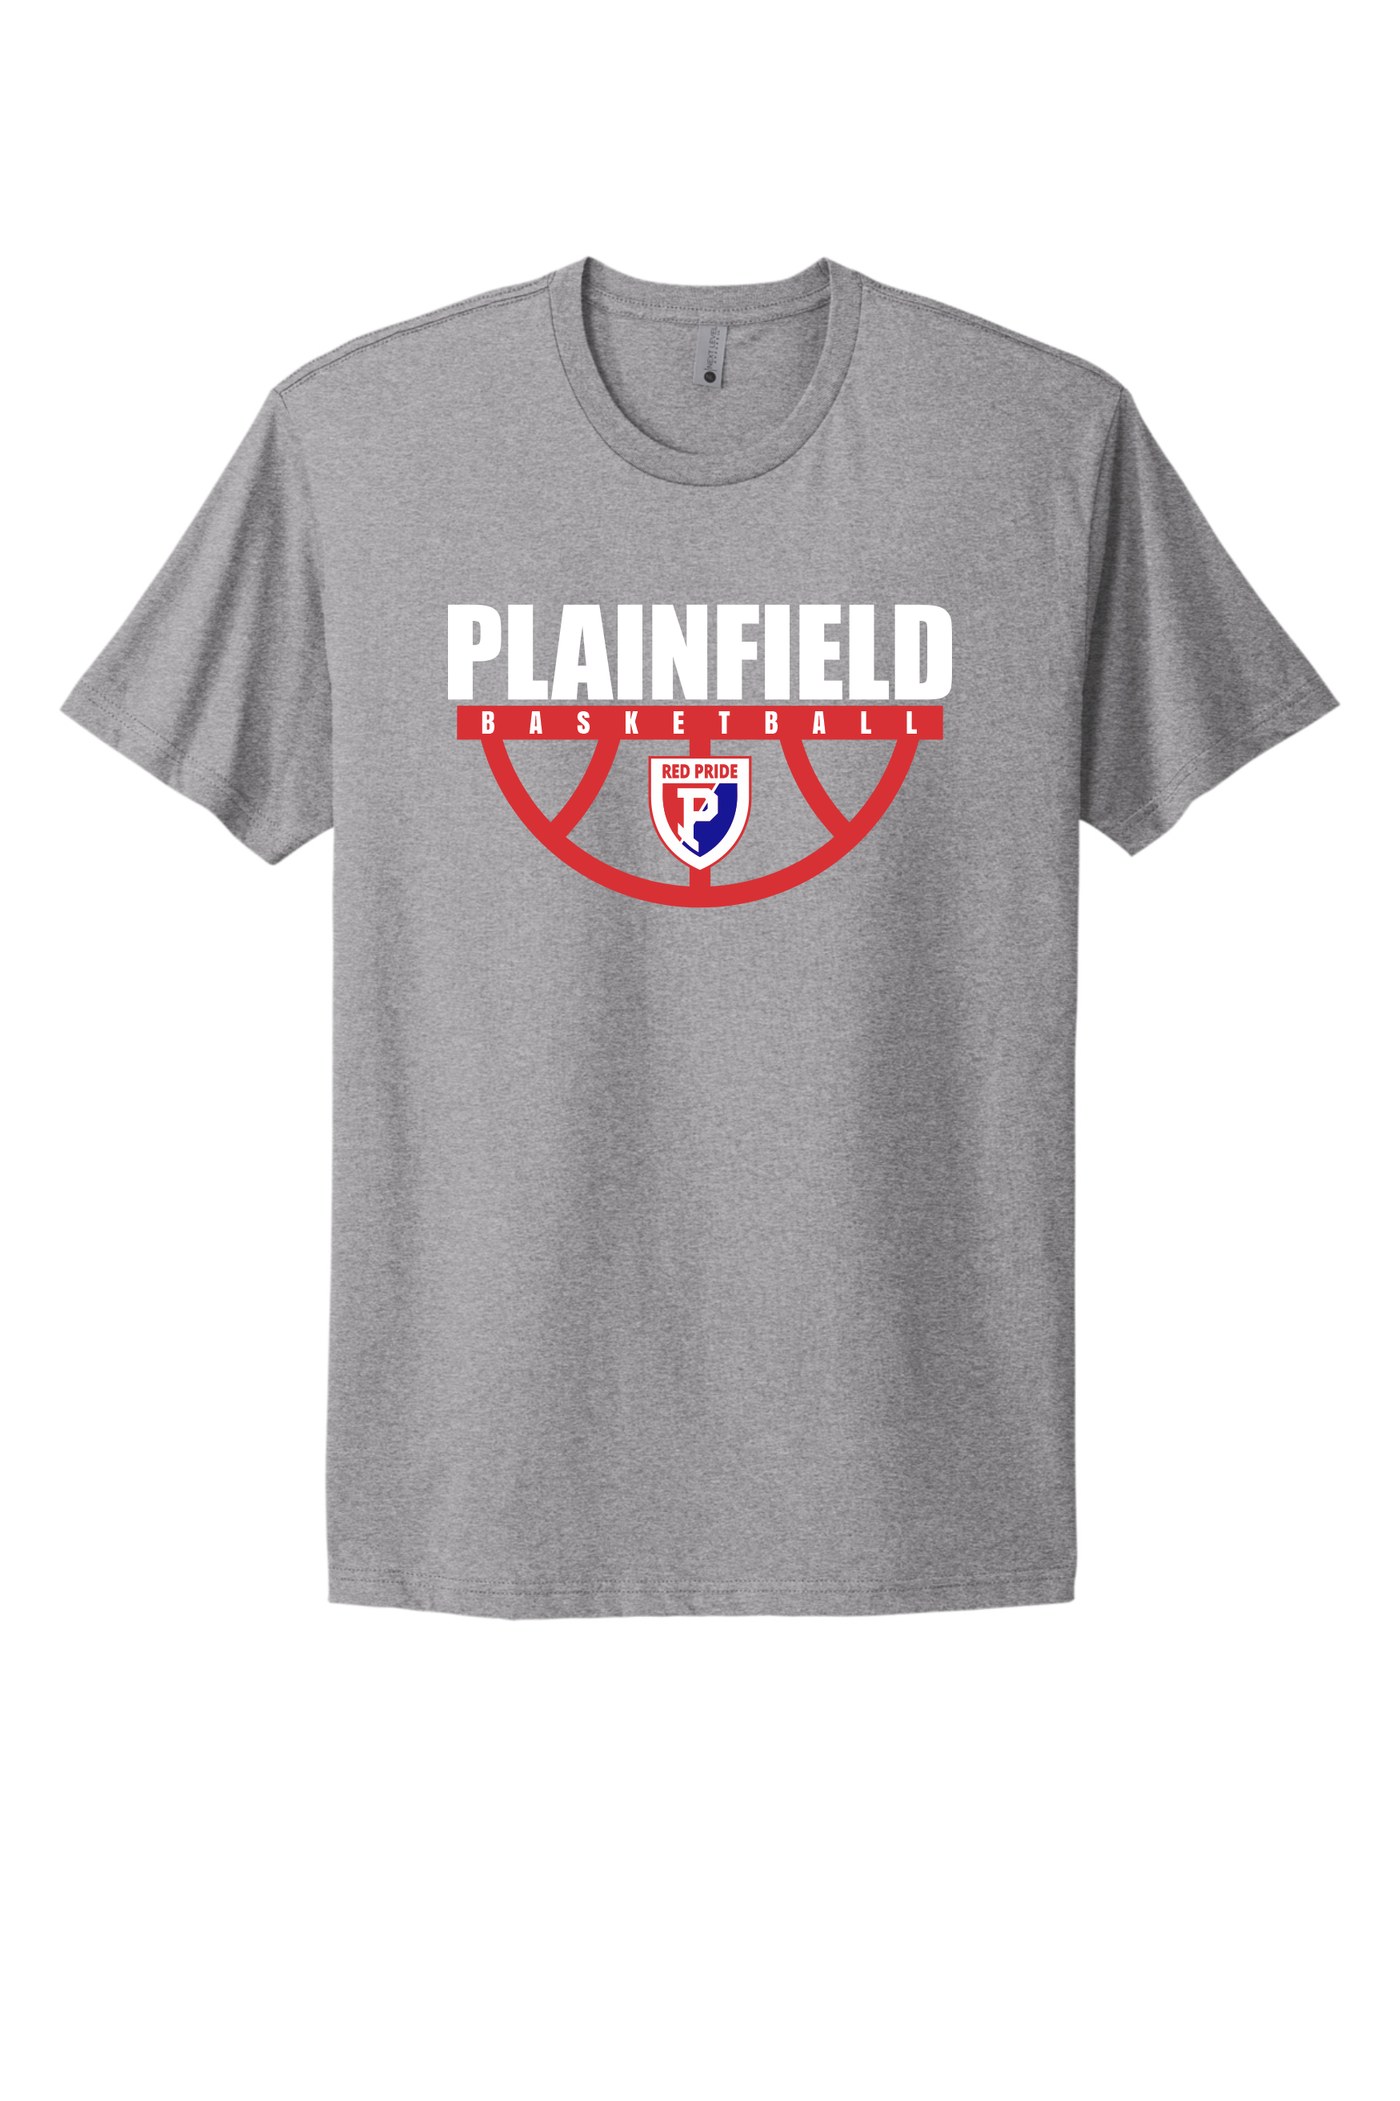 Plainfield Cotton Tee - T1 ADULT - Y&S Designs, LLC